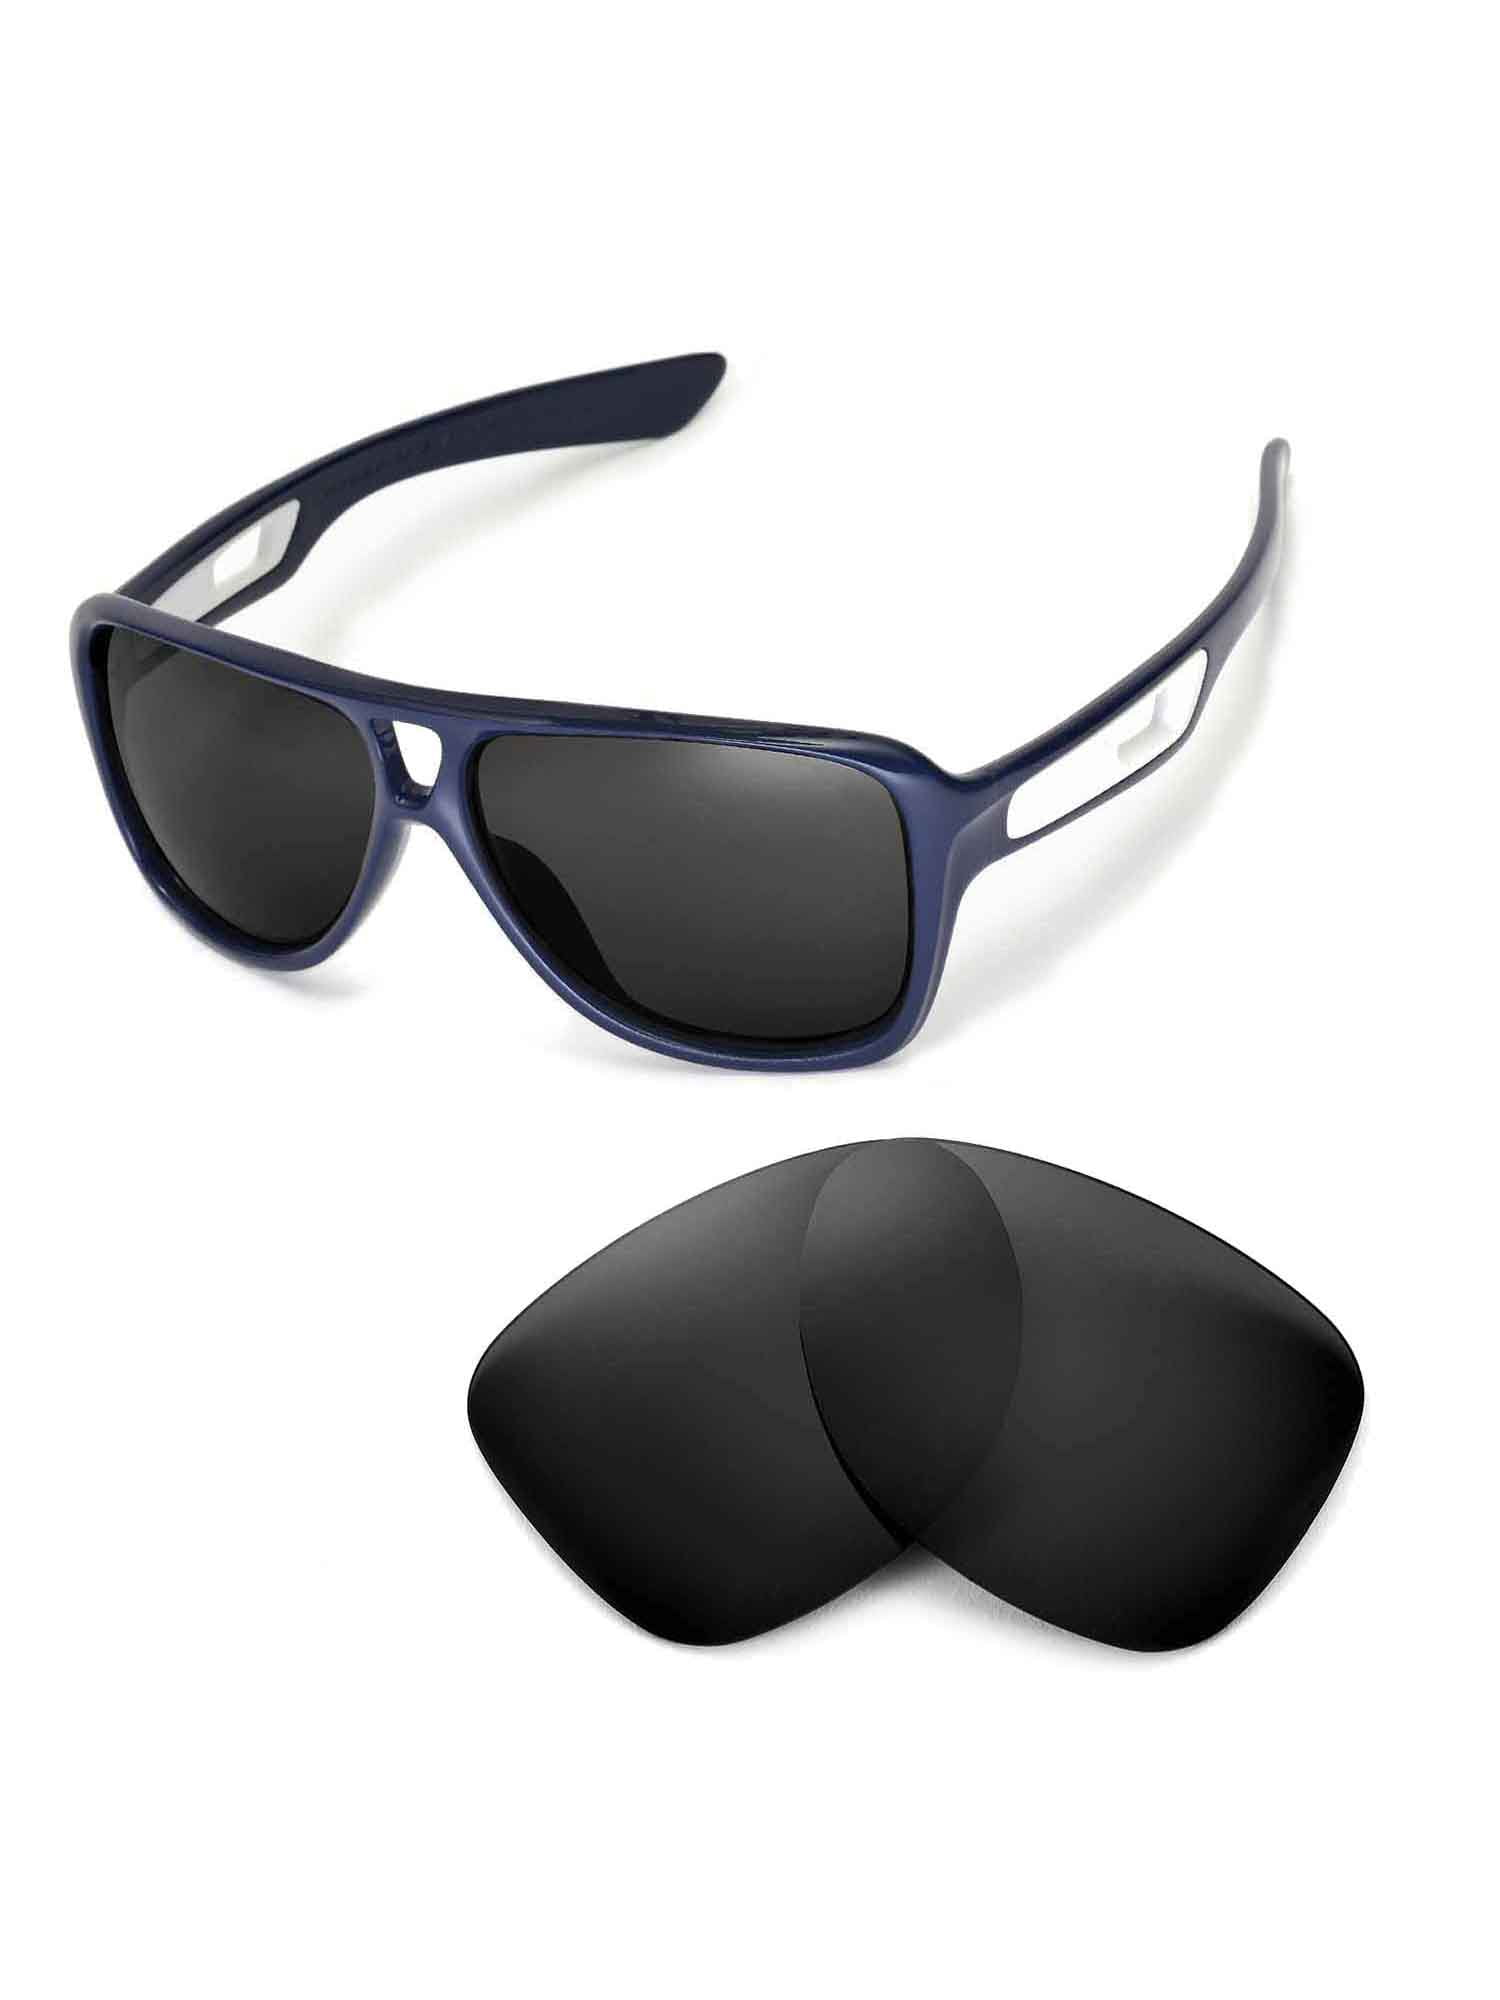 Walleva Black Polarized Replacement Lenses for Oakley Dispatch II  Sunglasses 